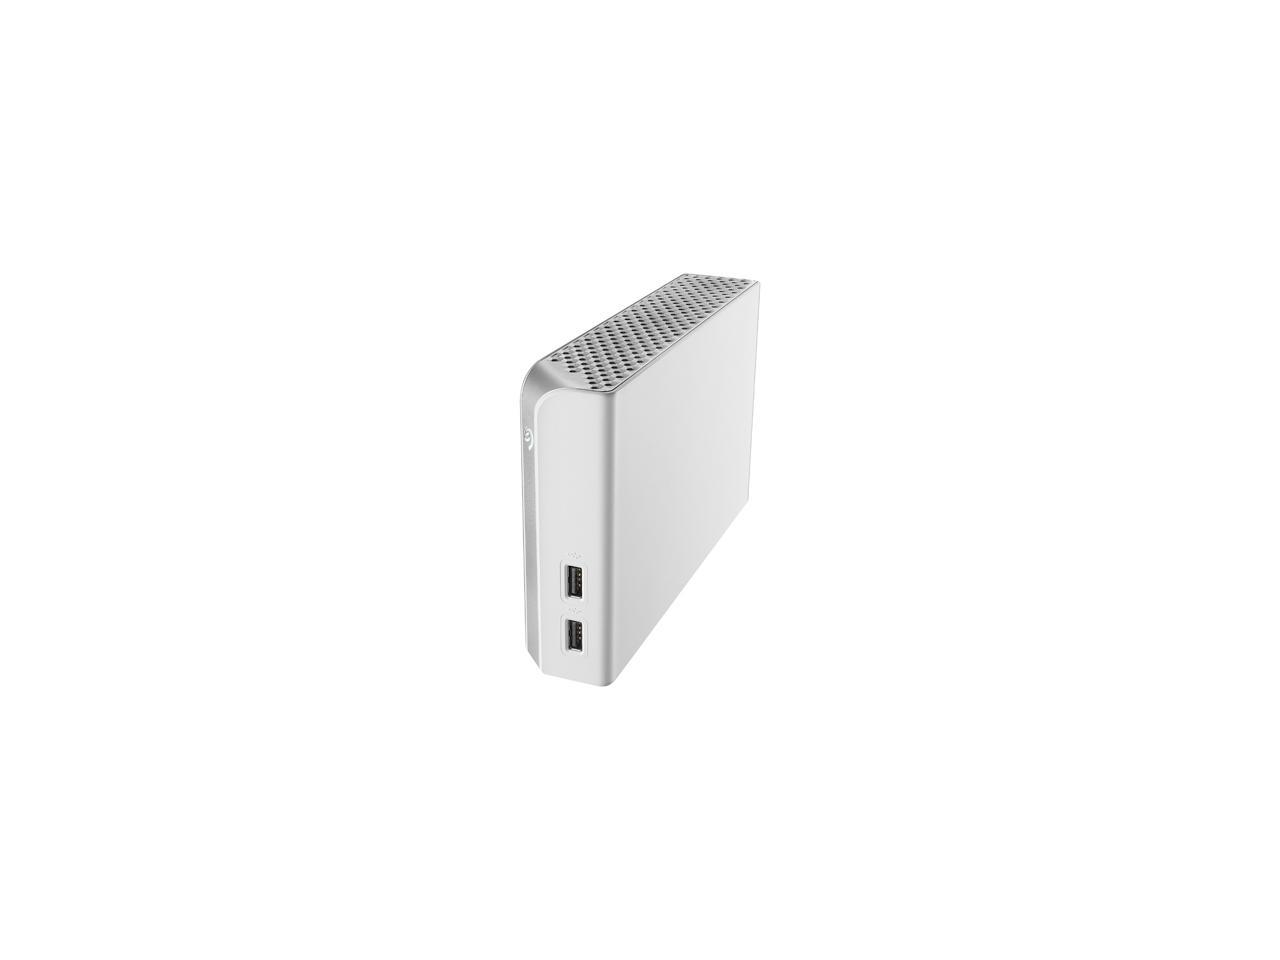 Seagate Backup Plus Hub for Mac 4TB USB 3.0 Desktop Drive with Integrated USB Hub Model STEM4000400